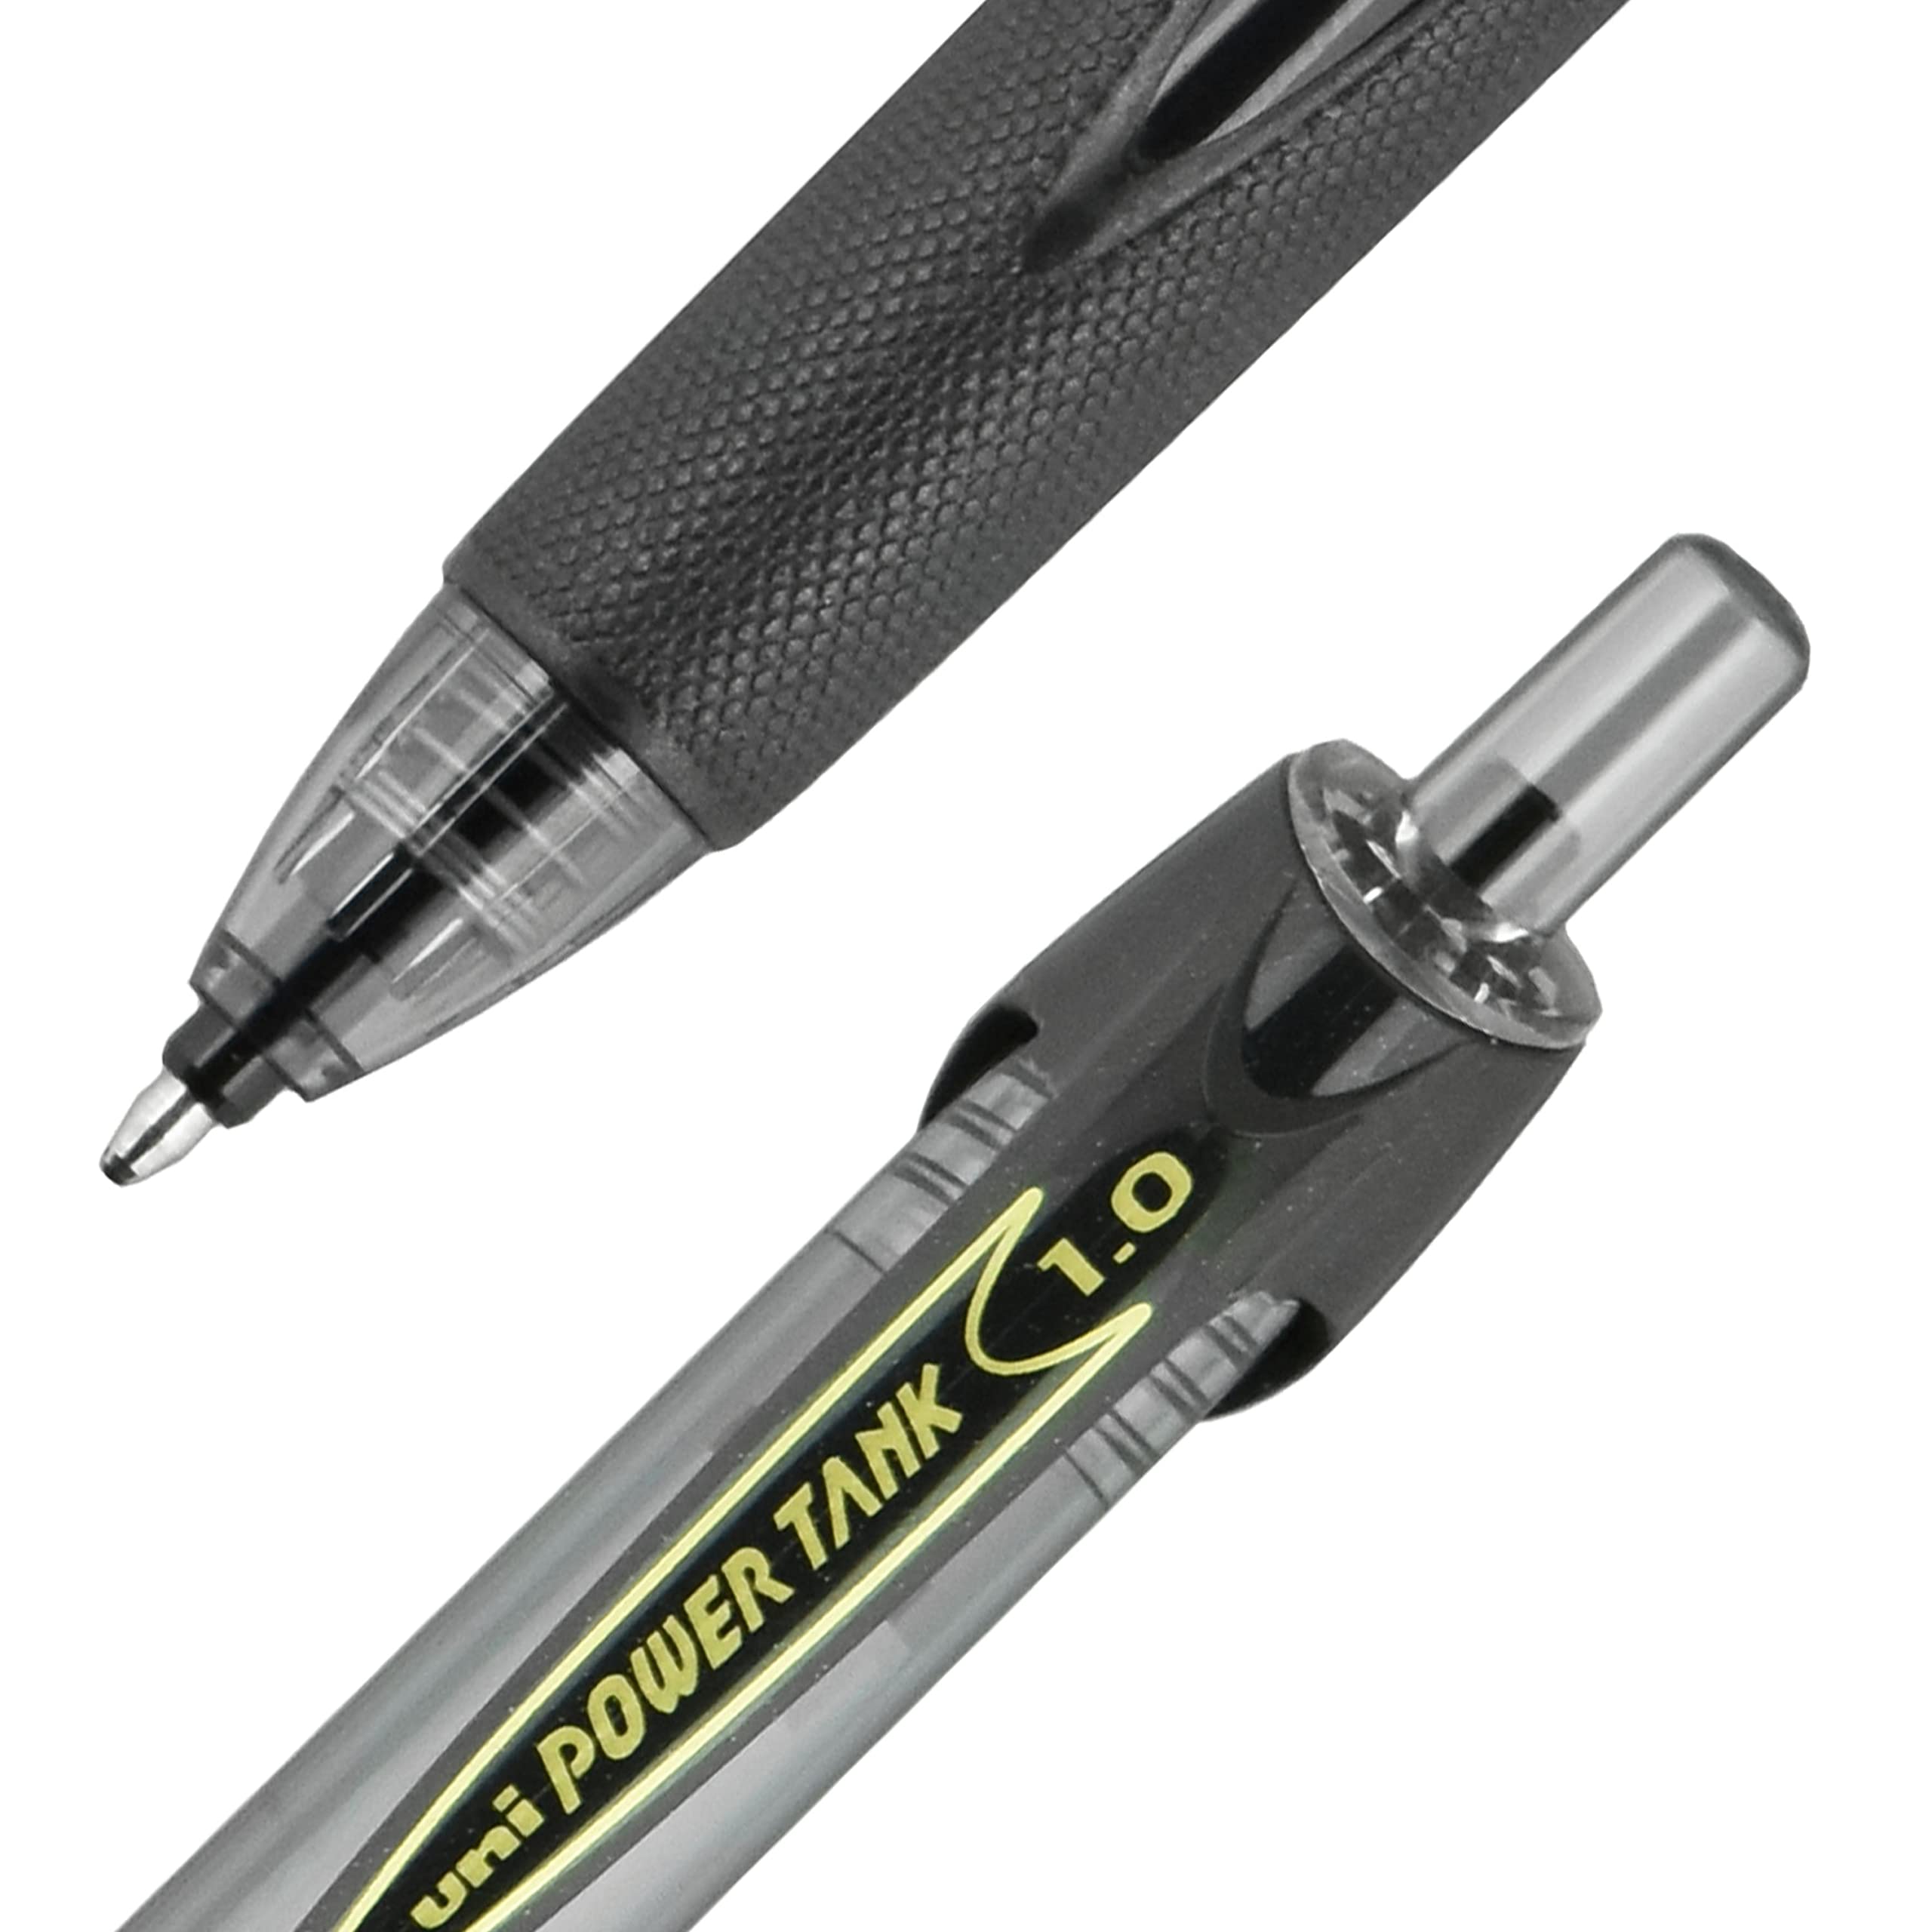 PowerTank RT Black Pens, 1.0mm Bold Pens 12 Pack - Similar to Gel Pens, Pens Ballpoint, Pen Retractable, Bulk Pens, Bulk Ink Pens, Office Supplies, Colored Pens, Pens Fine Point Smooth Writing Pens,